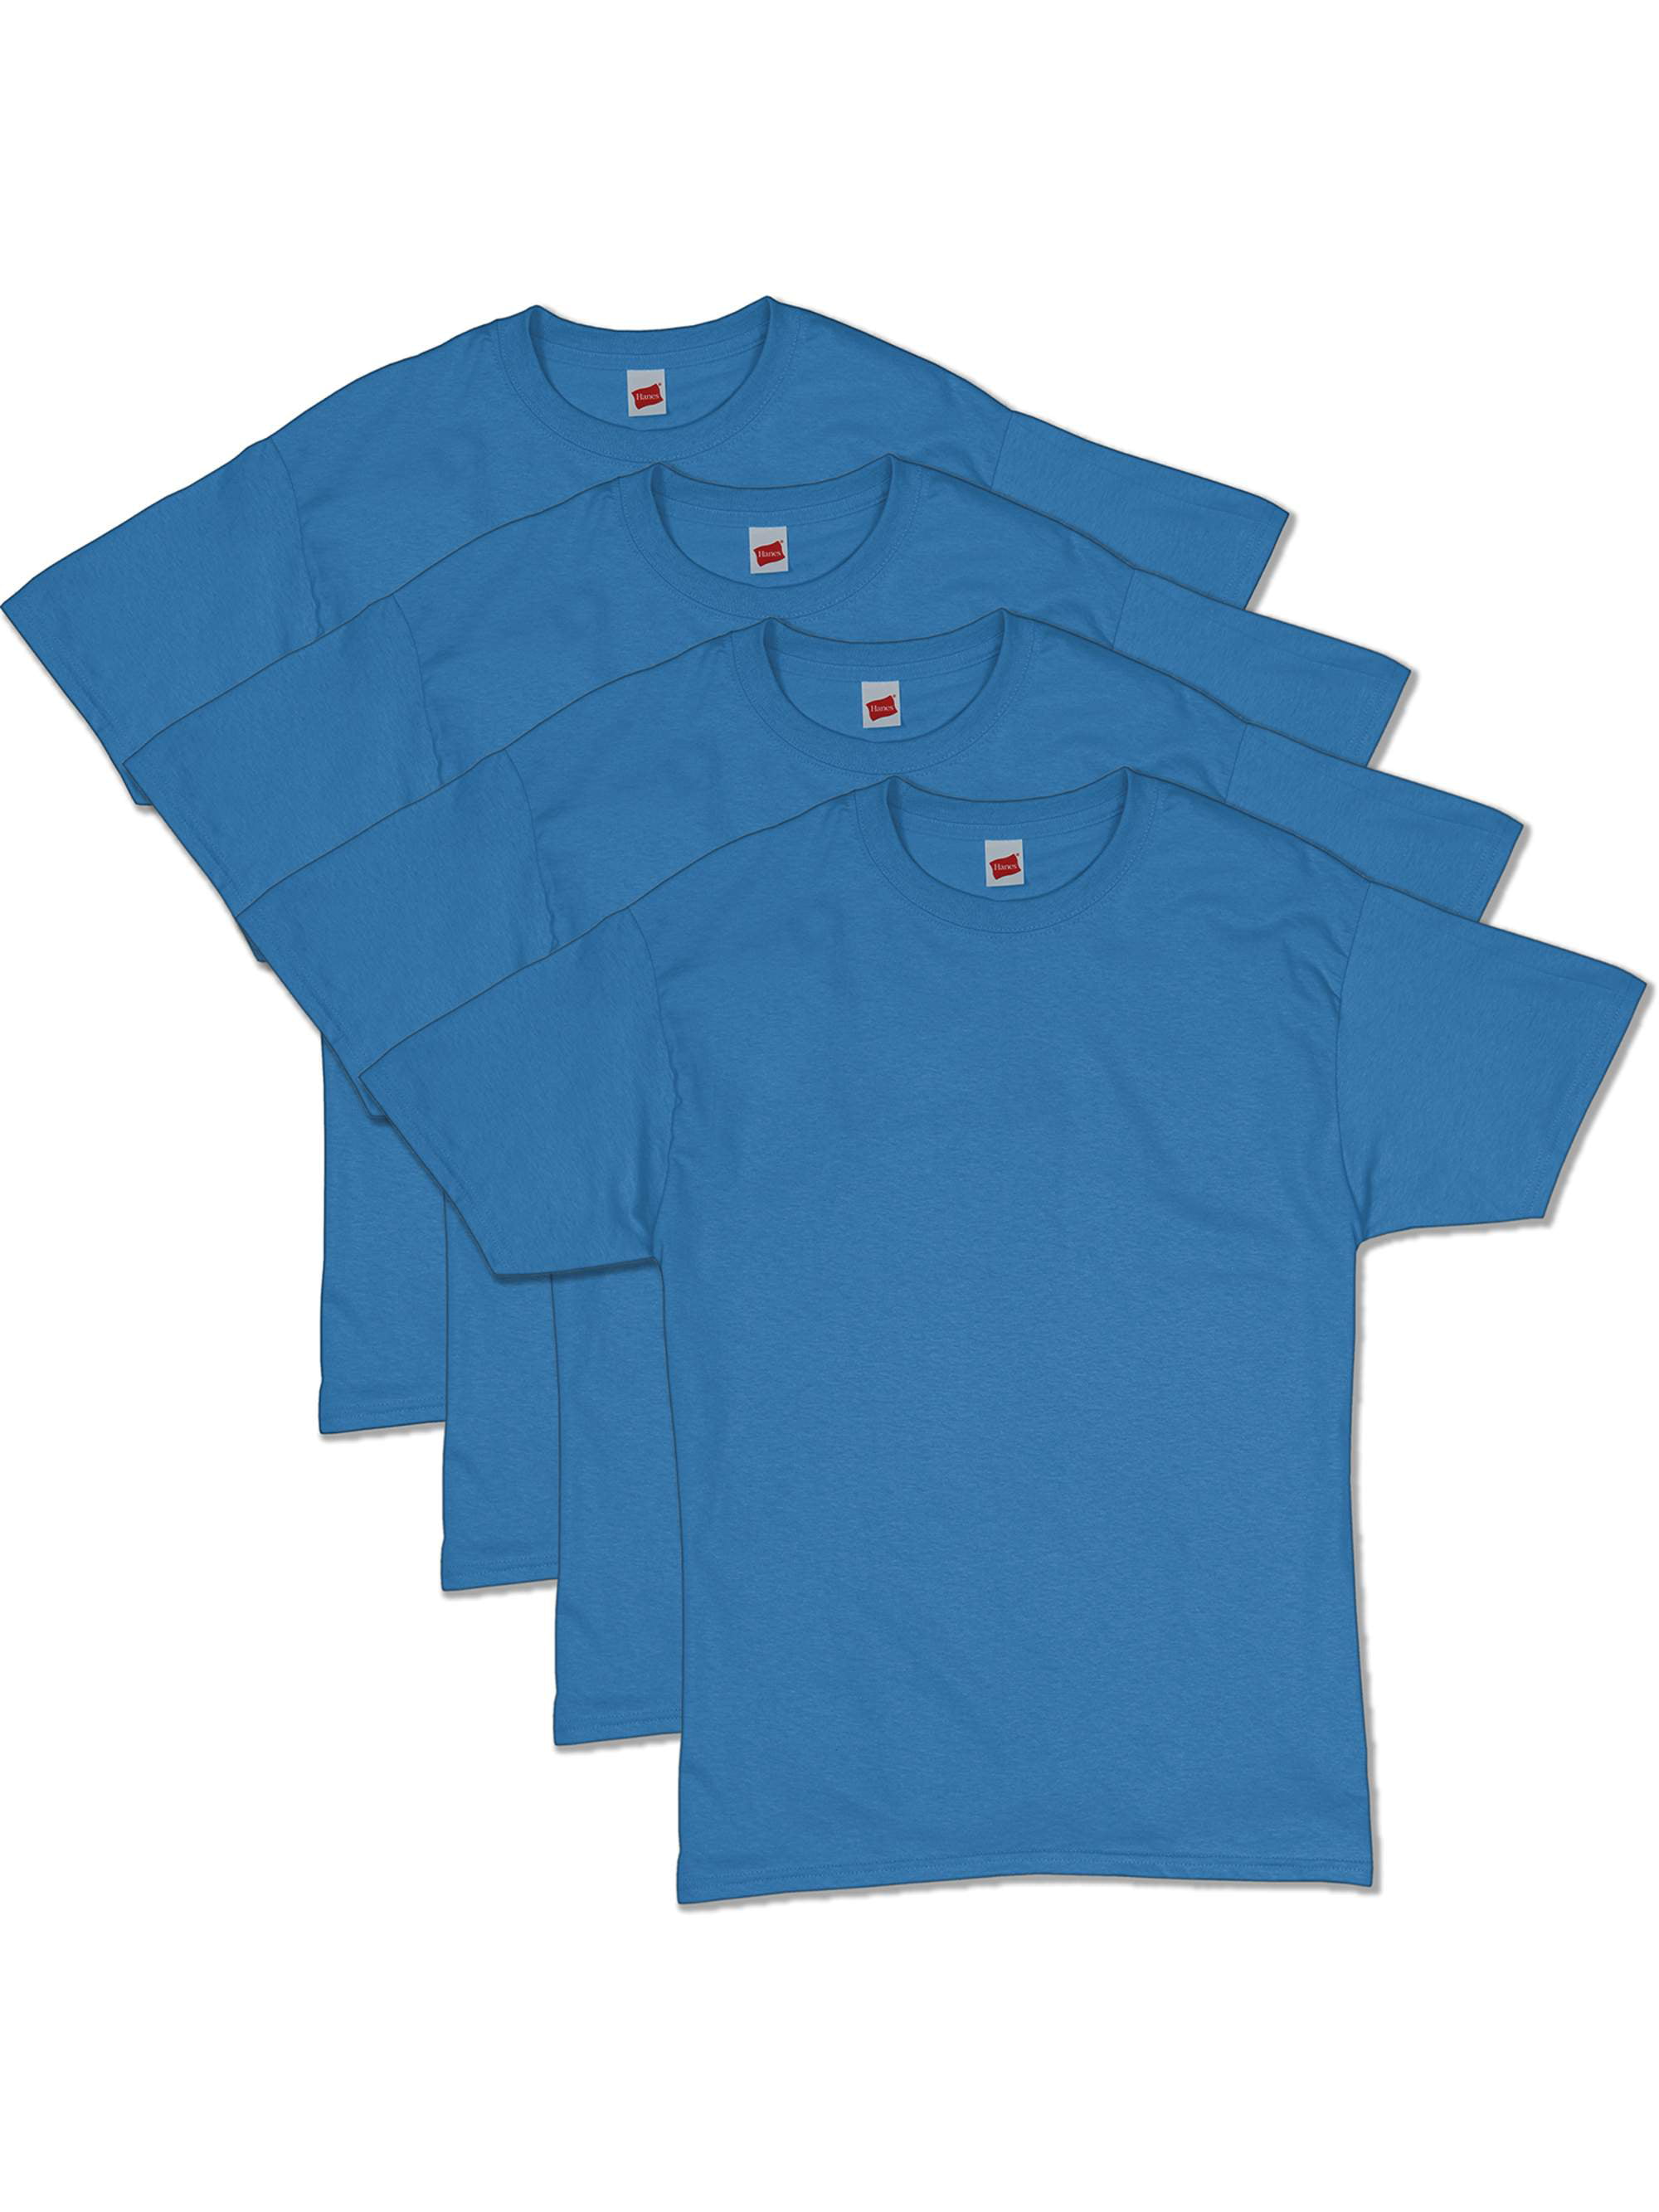 Hanes - Hanes Men's ComfortSoft Short Sleeve Tee Value Pack (4-pack ...